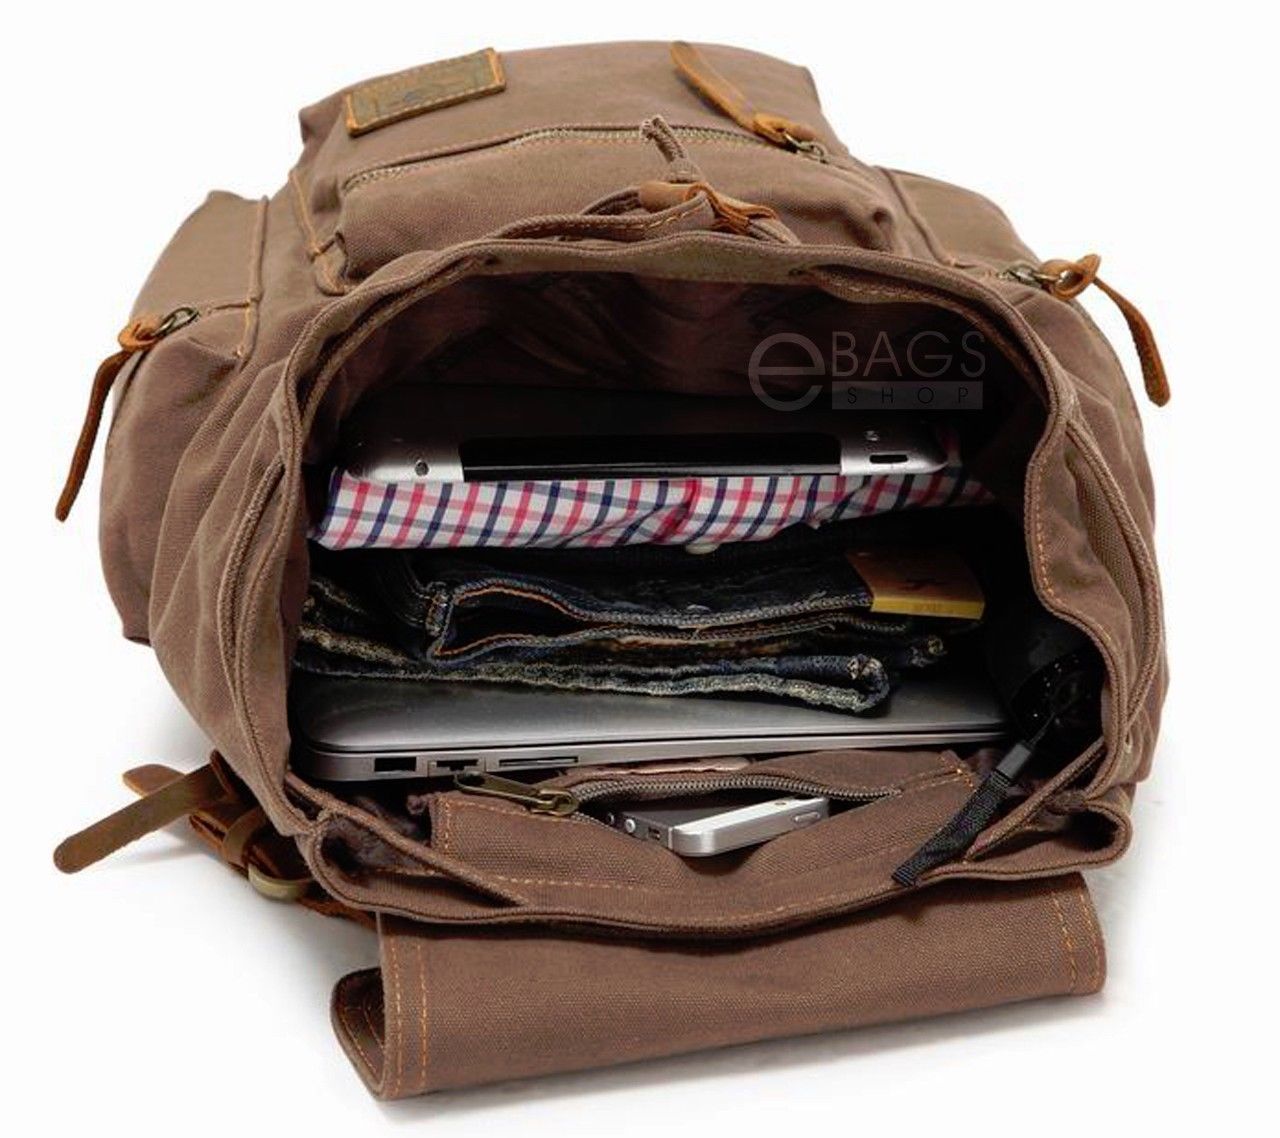 Travel Canvas Sport Rucksack Camping School Satchel Laptop Hiking Bag Backpack